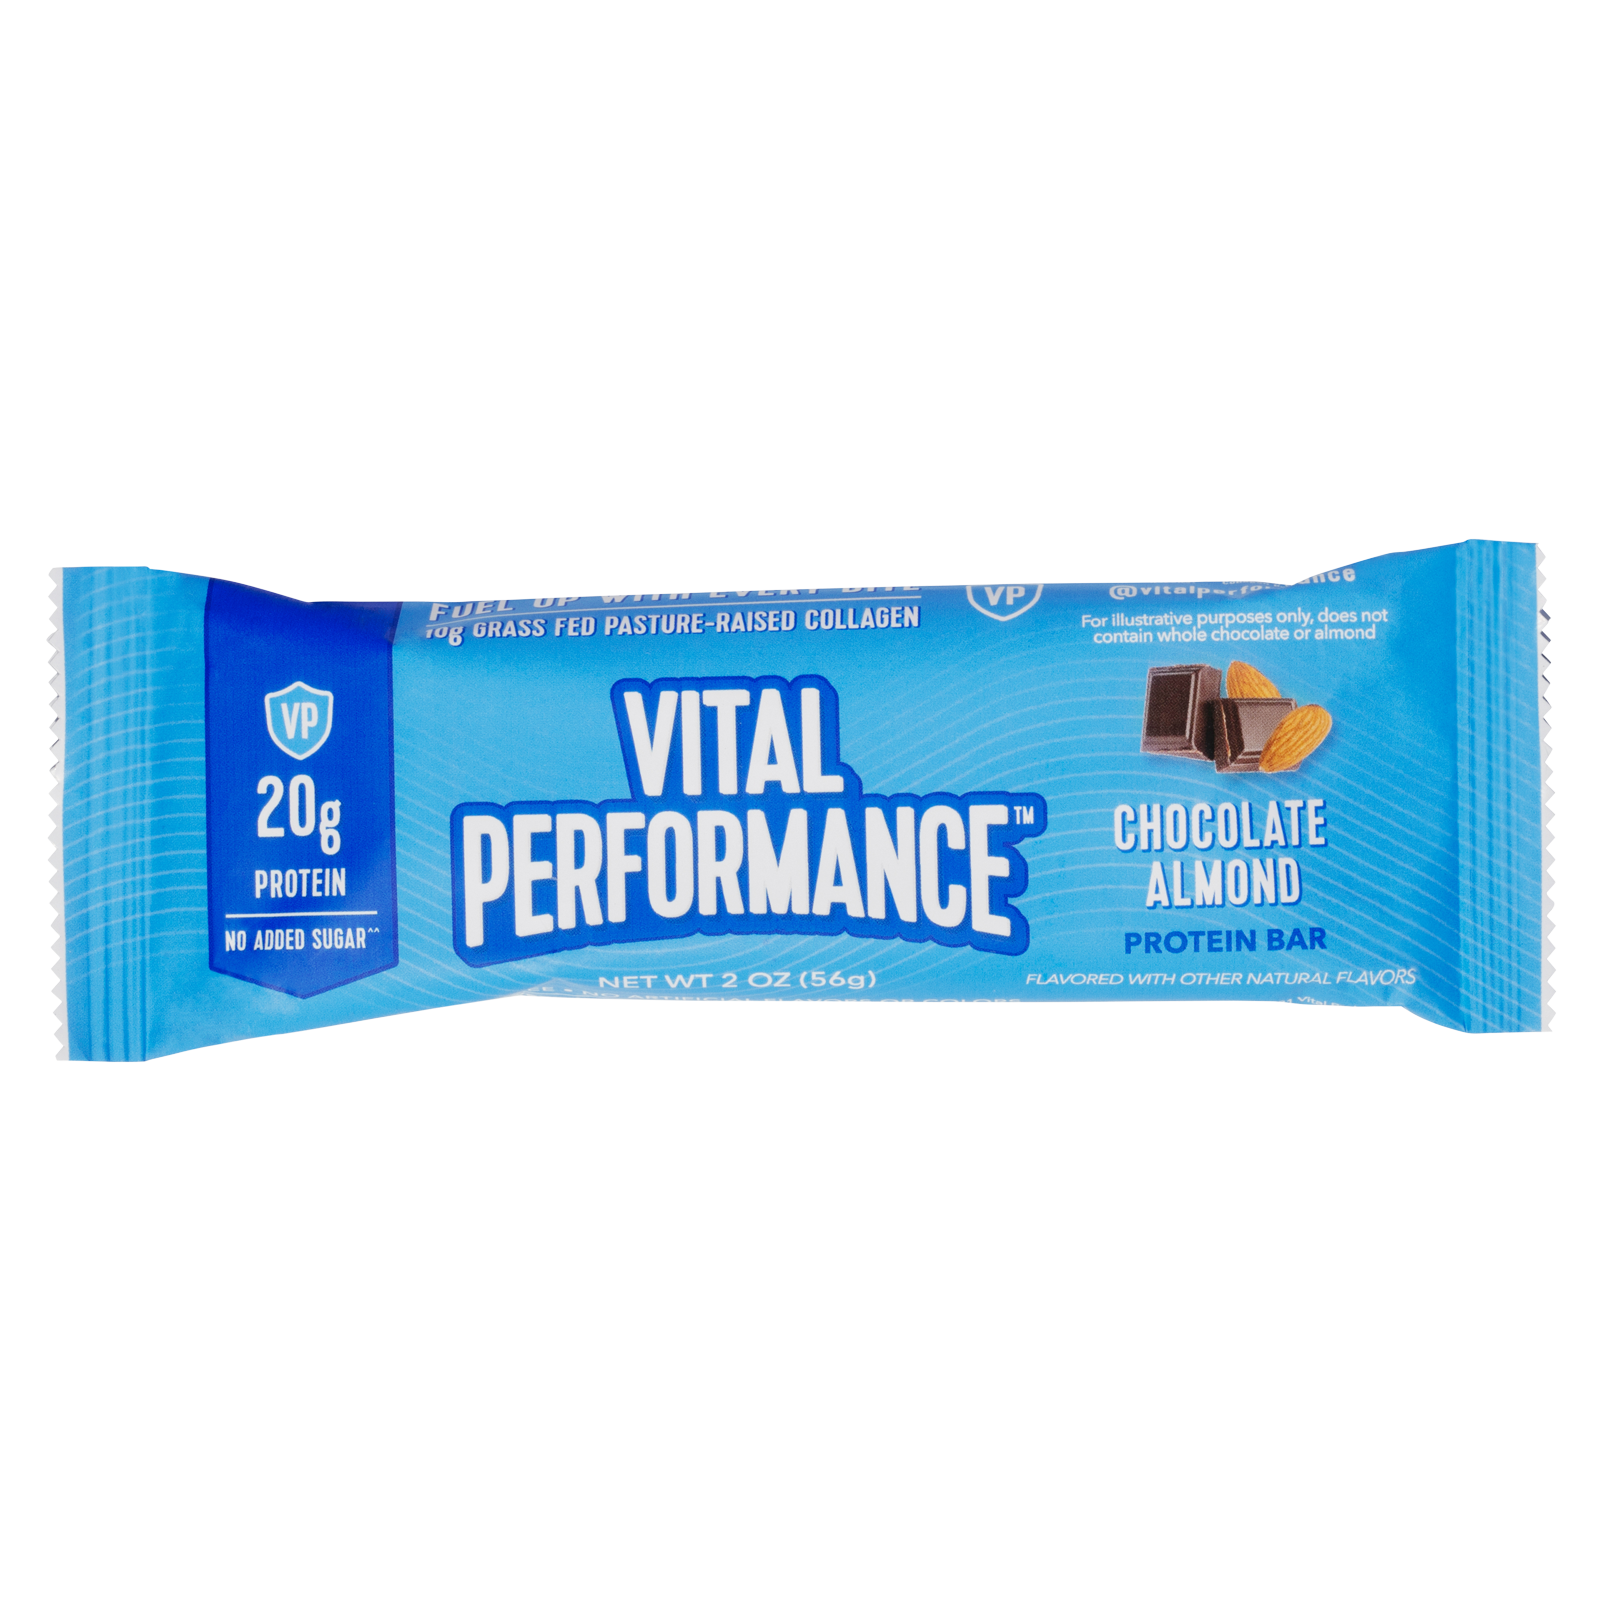 Vital Performance Chocolate Almond Protein Bar